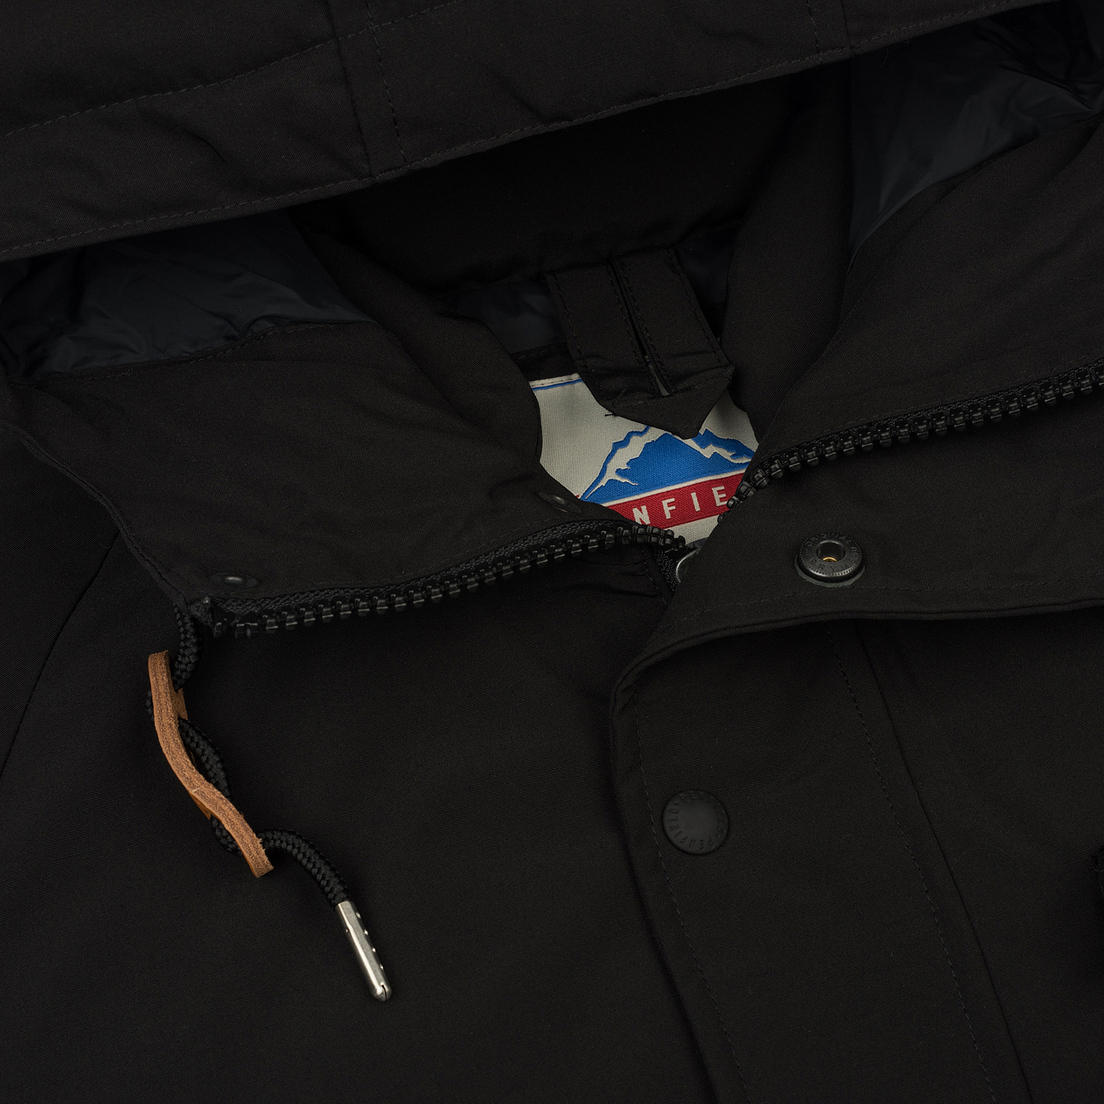 Penfield Мужская куртка парка Apex Down Insulated Detachable Hooded